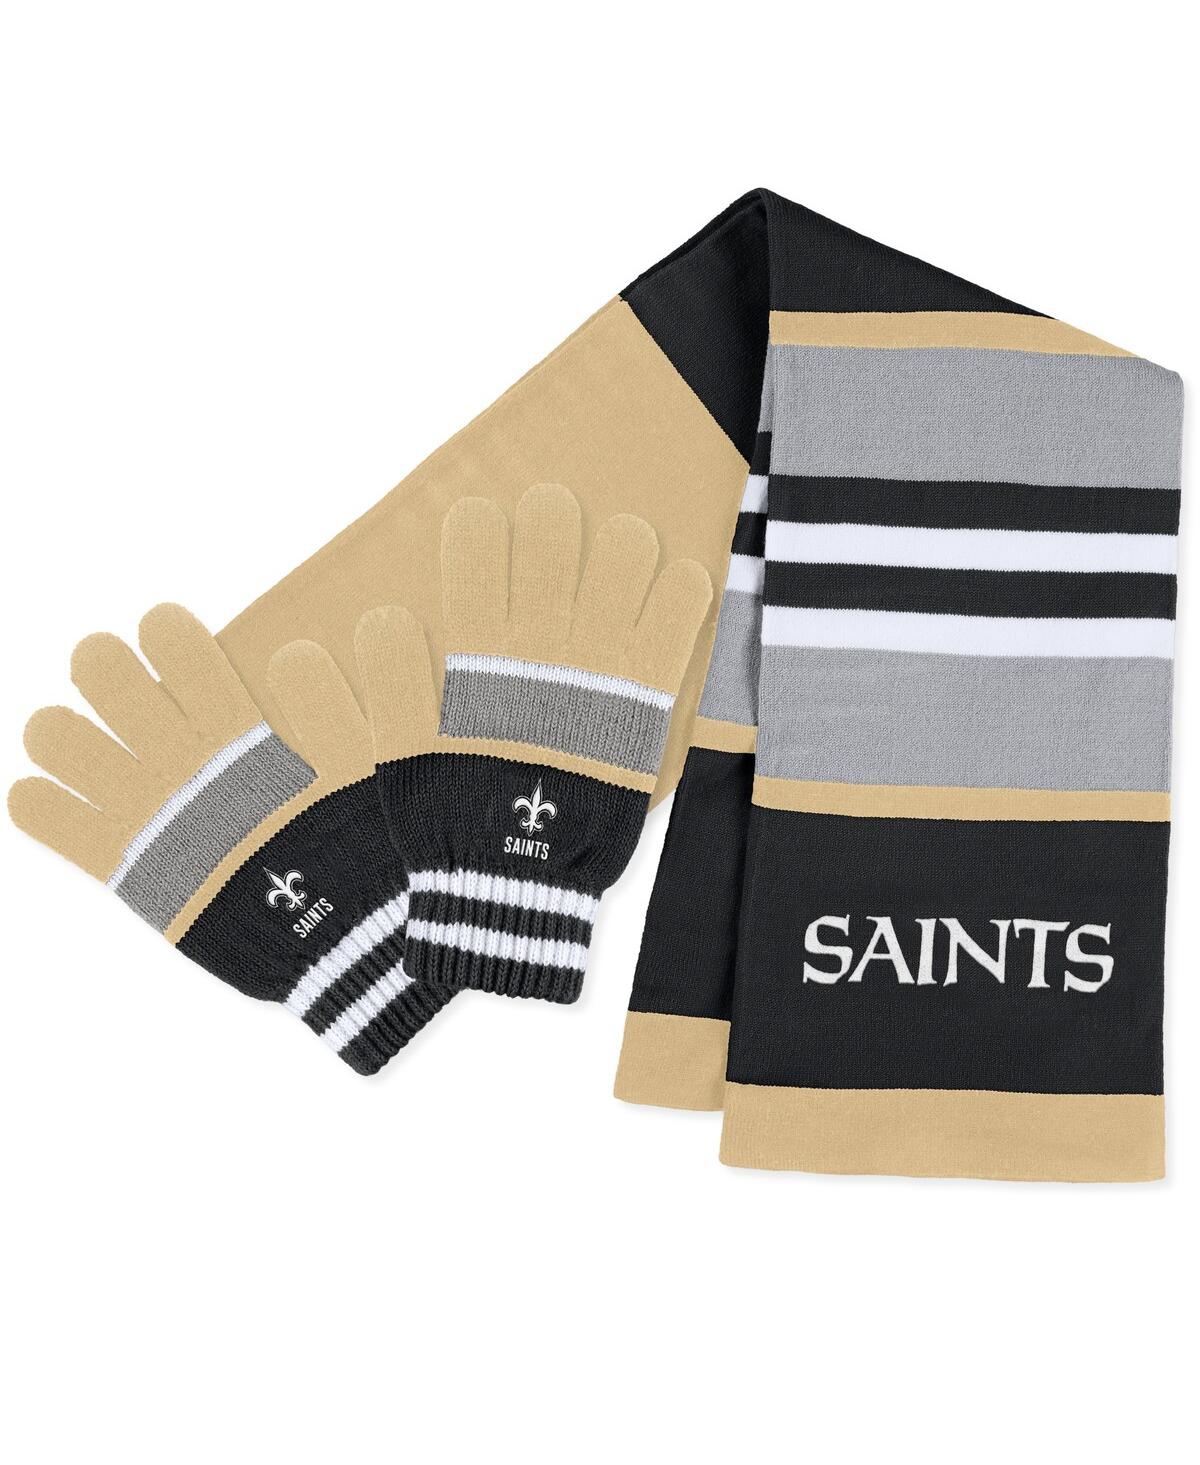 Women's Wear by Erin Andrews New Orleans Saints Stripe Glove and Scarf Set - Cream, Black